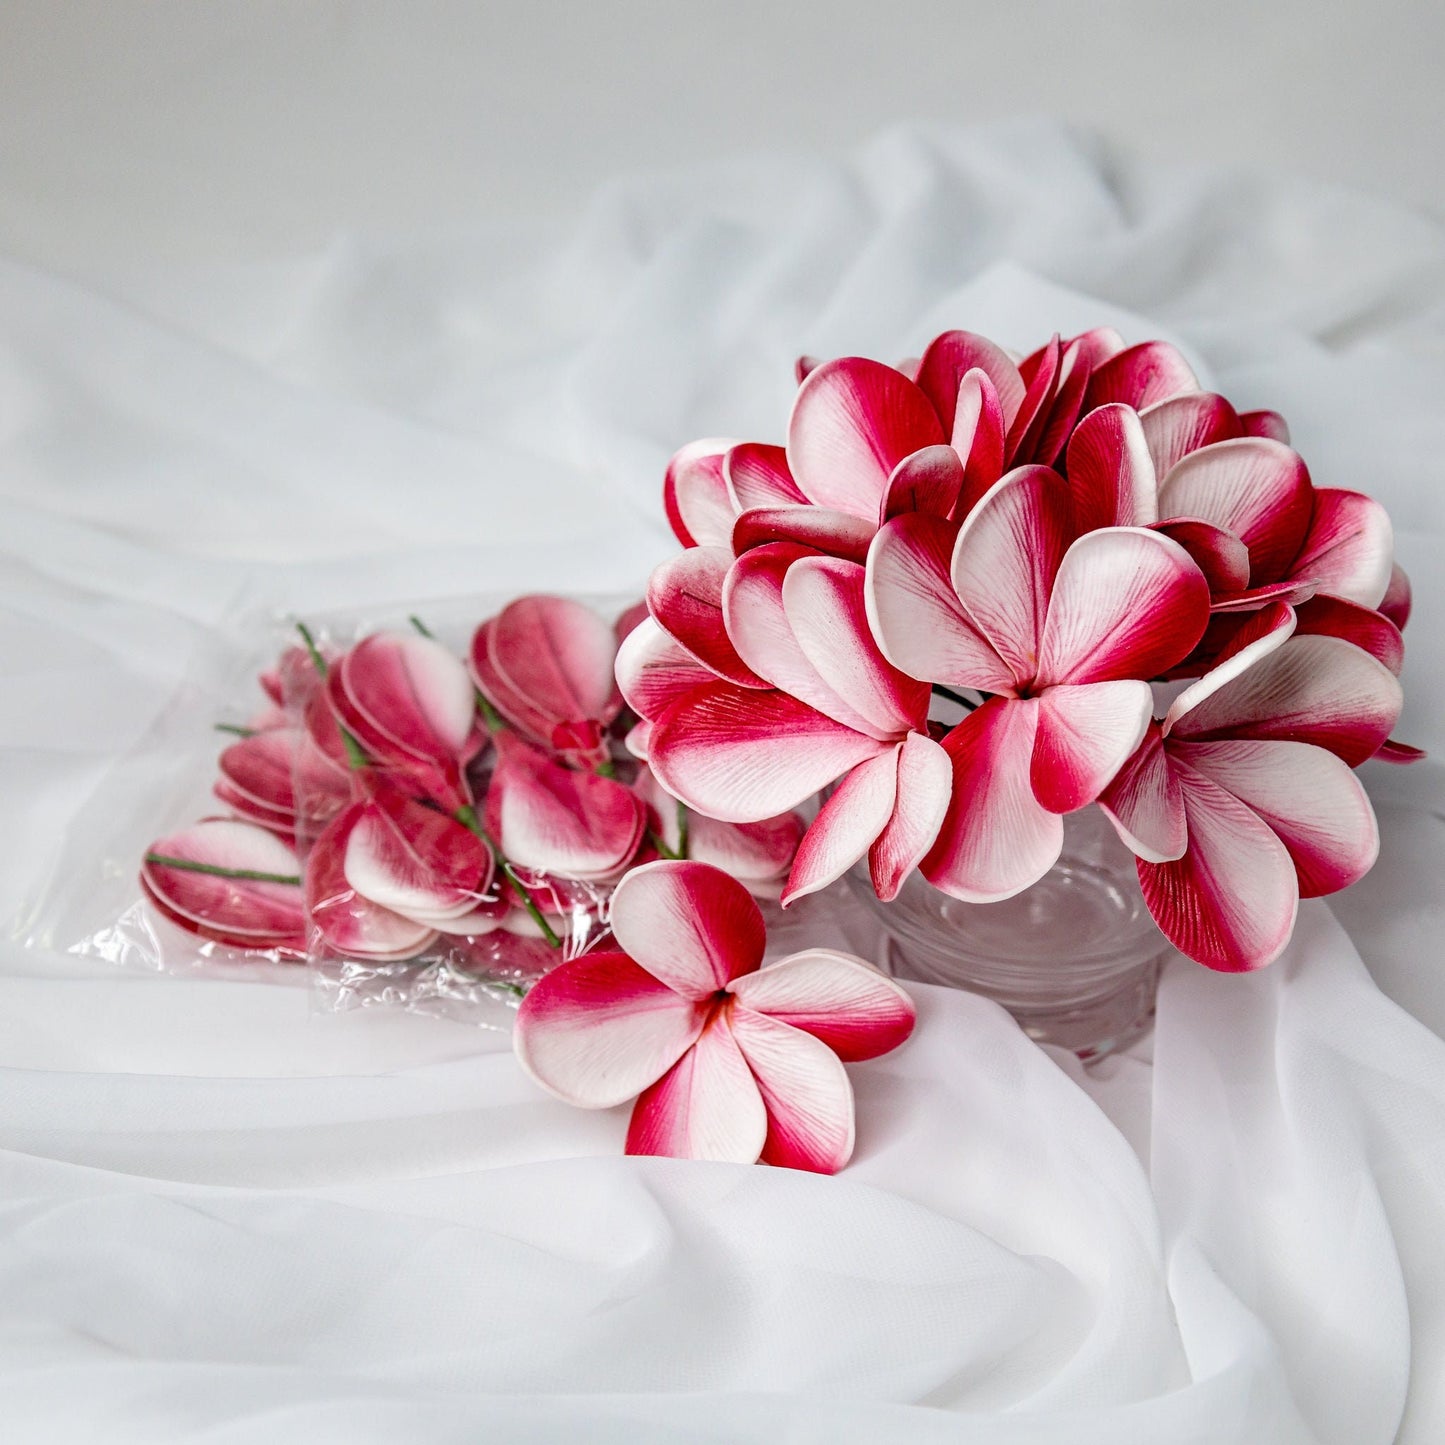 Candy Stripe Frangipani Flowerhead - Realistic Artificial Flowers